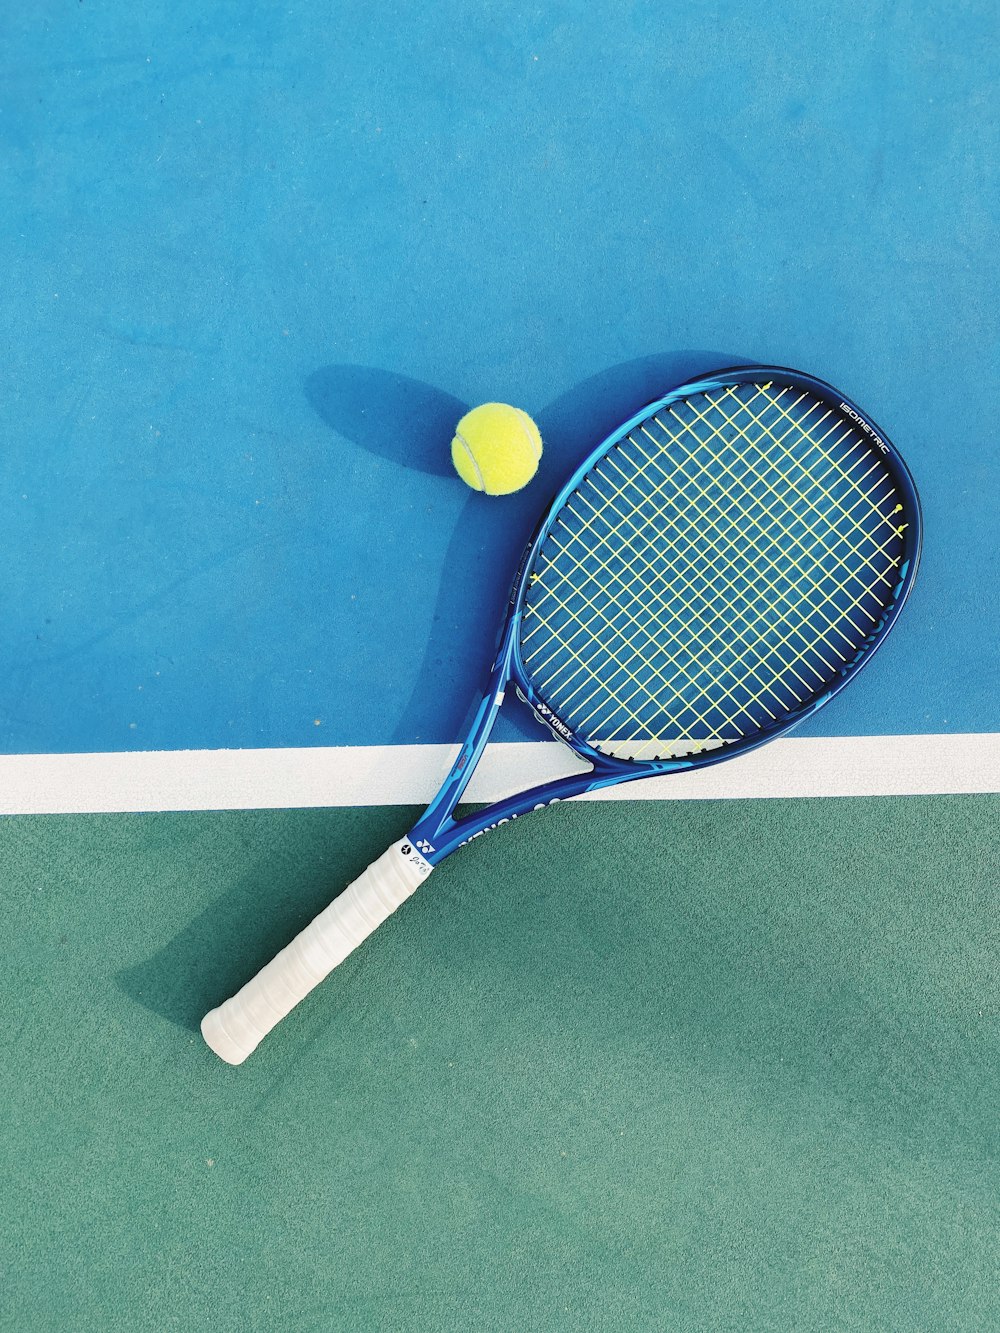 White and blue tennis racket photo – Free Racket Image on Unsplash